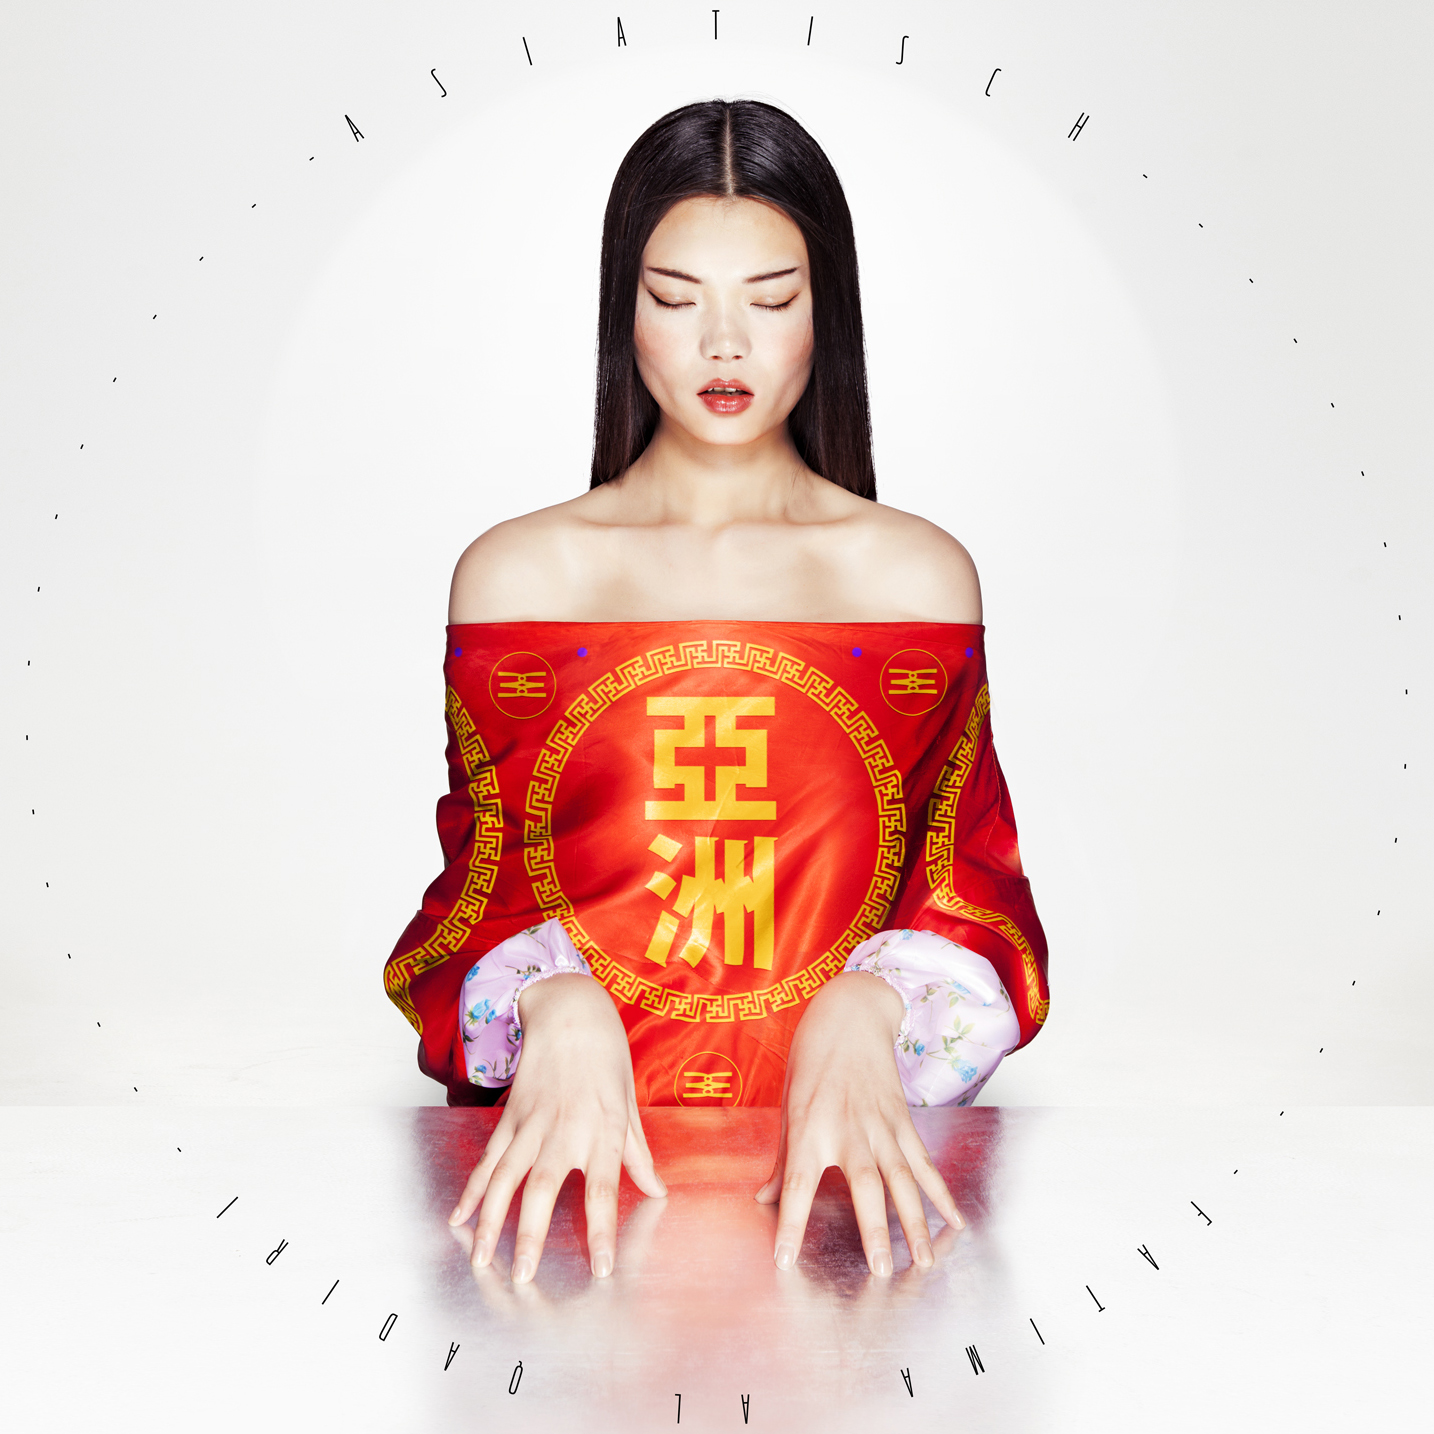 Shanzhai (For Shanzhai Biennial) [feat. Helen Feng]